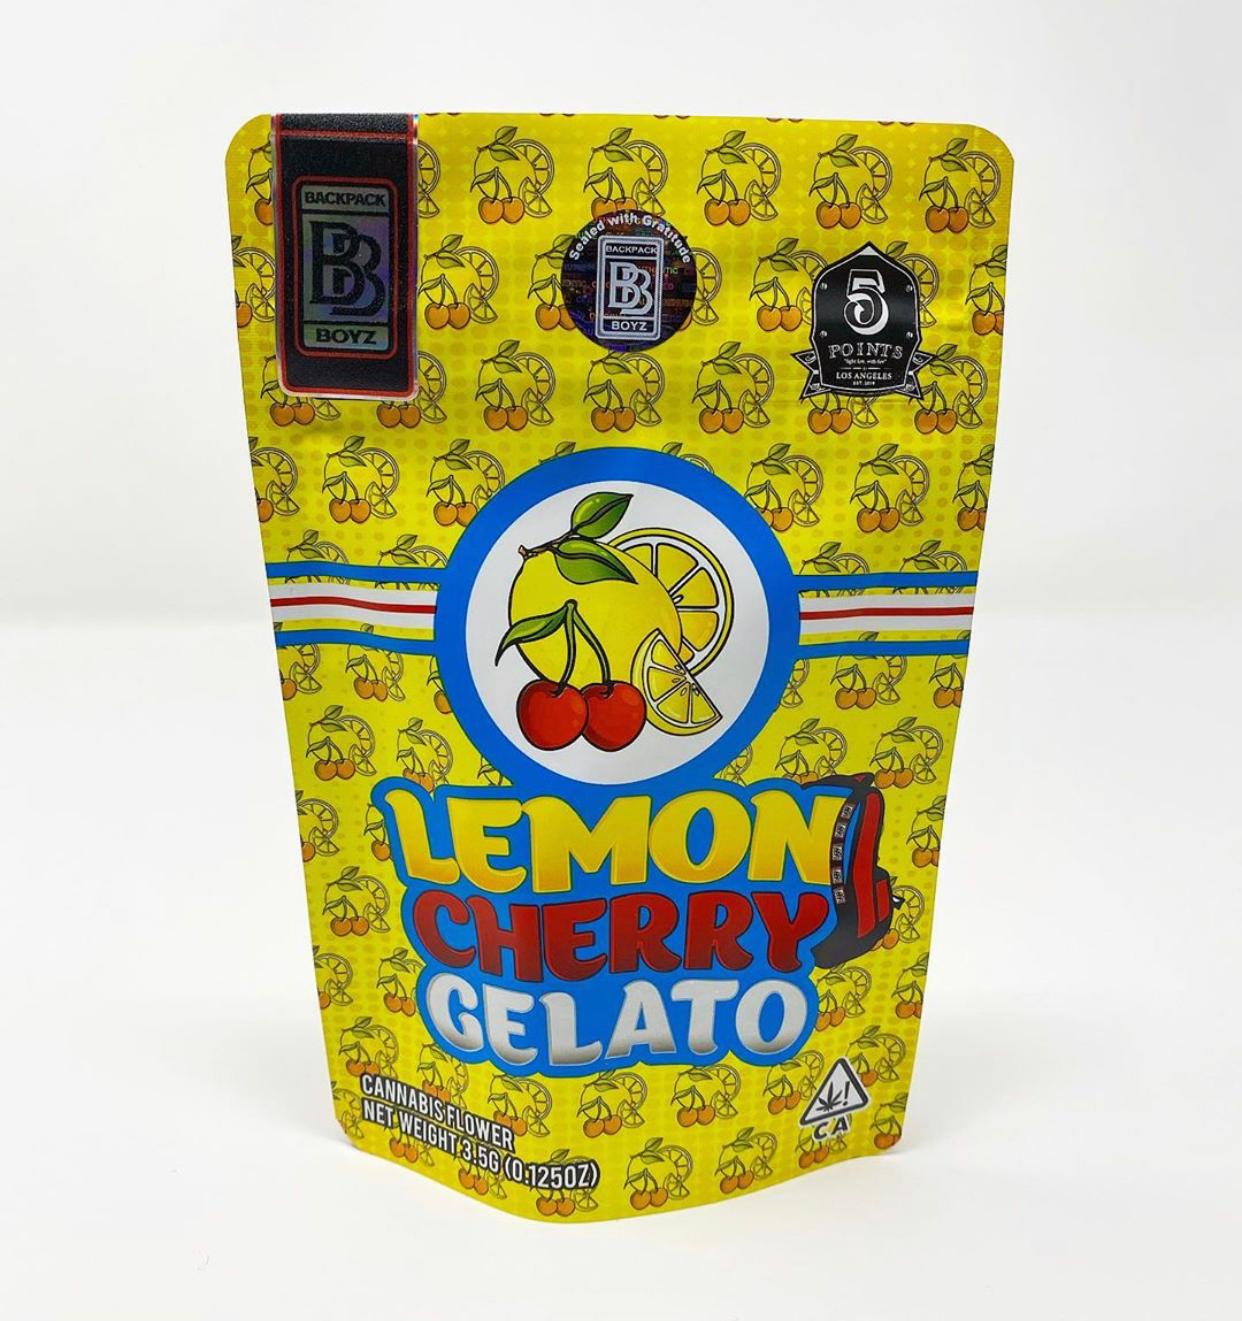 lemon cherry gelato lemon cherry gelato strain backpack boyz lemon cherry gelato lemon cherry gelato backpackboyz lemon cherry gelato bags